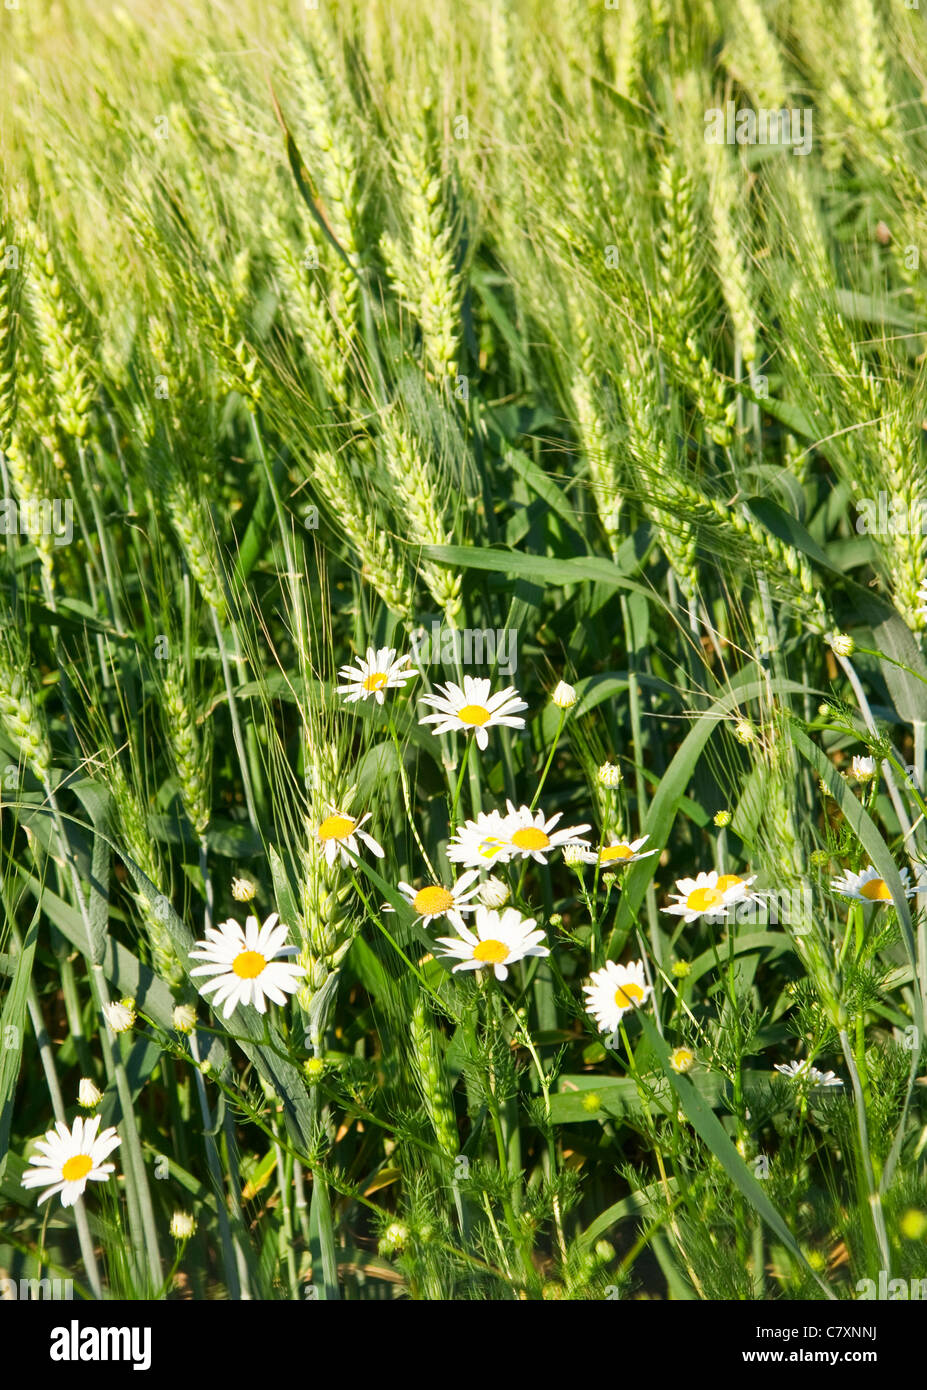 White camomile wild fower in wheat field Stock Photo